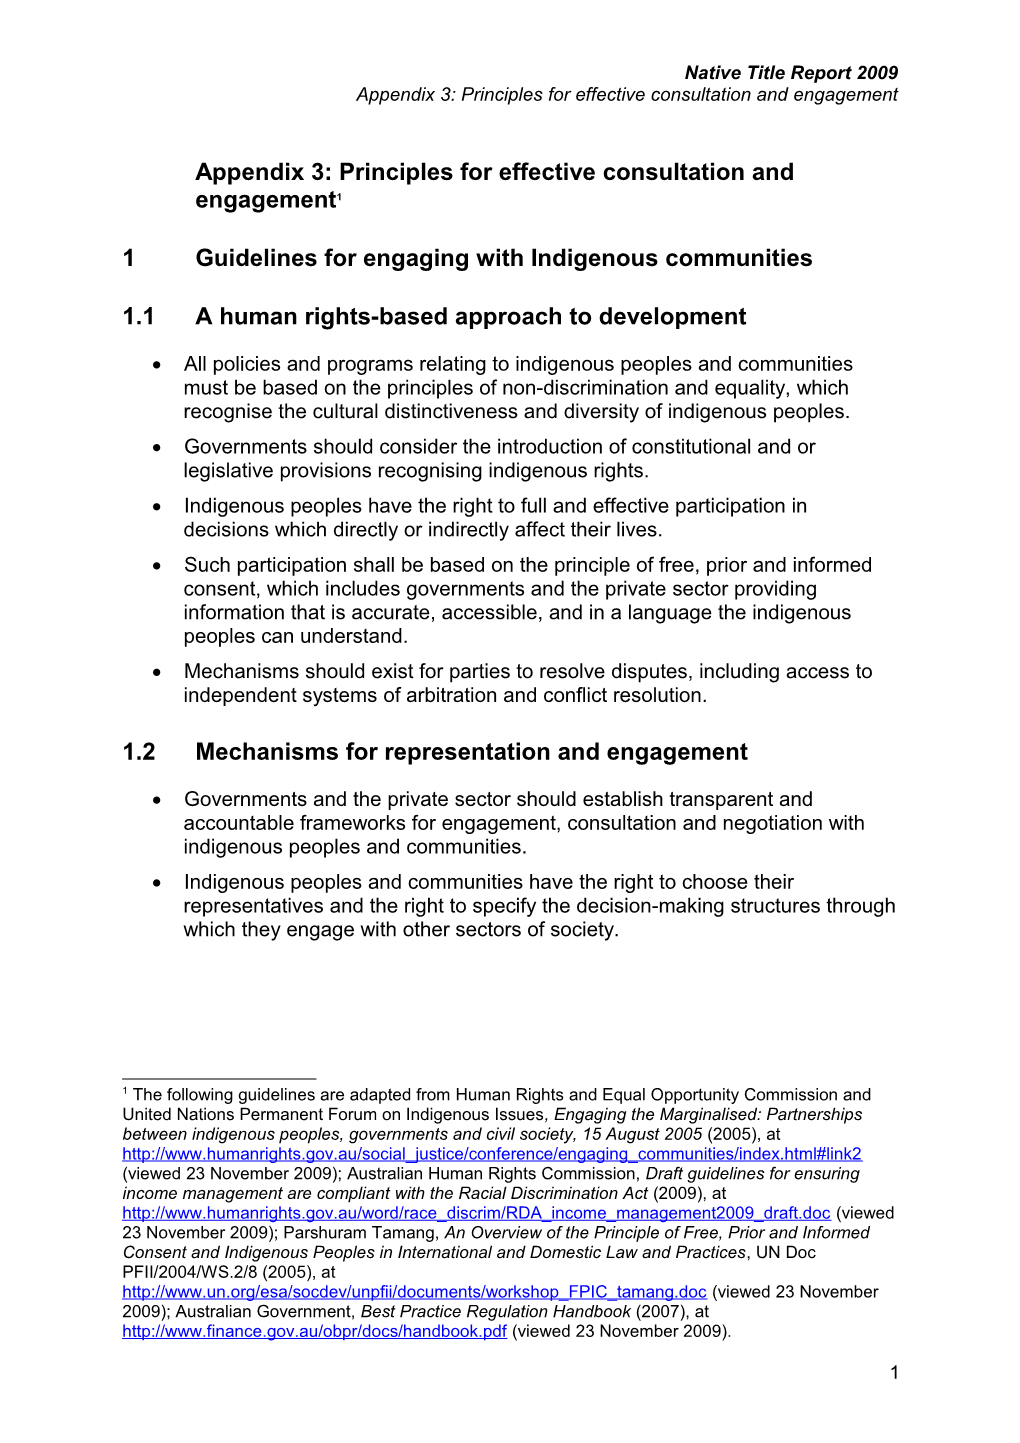 Appendix 3: Principles for Effective Consultation and Engagement 1